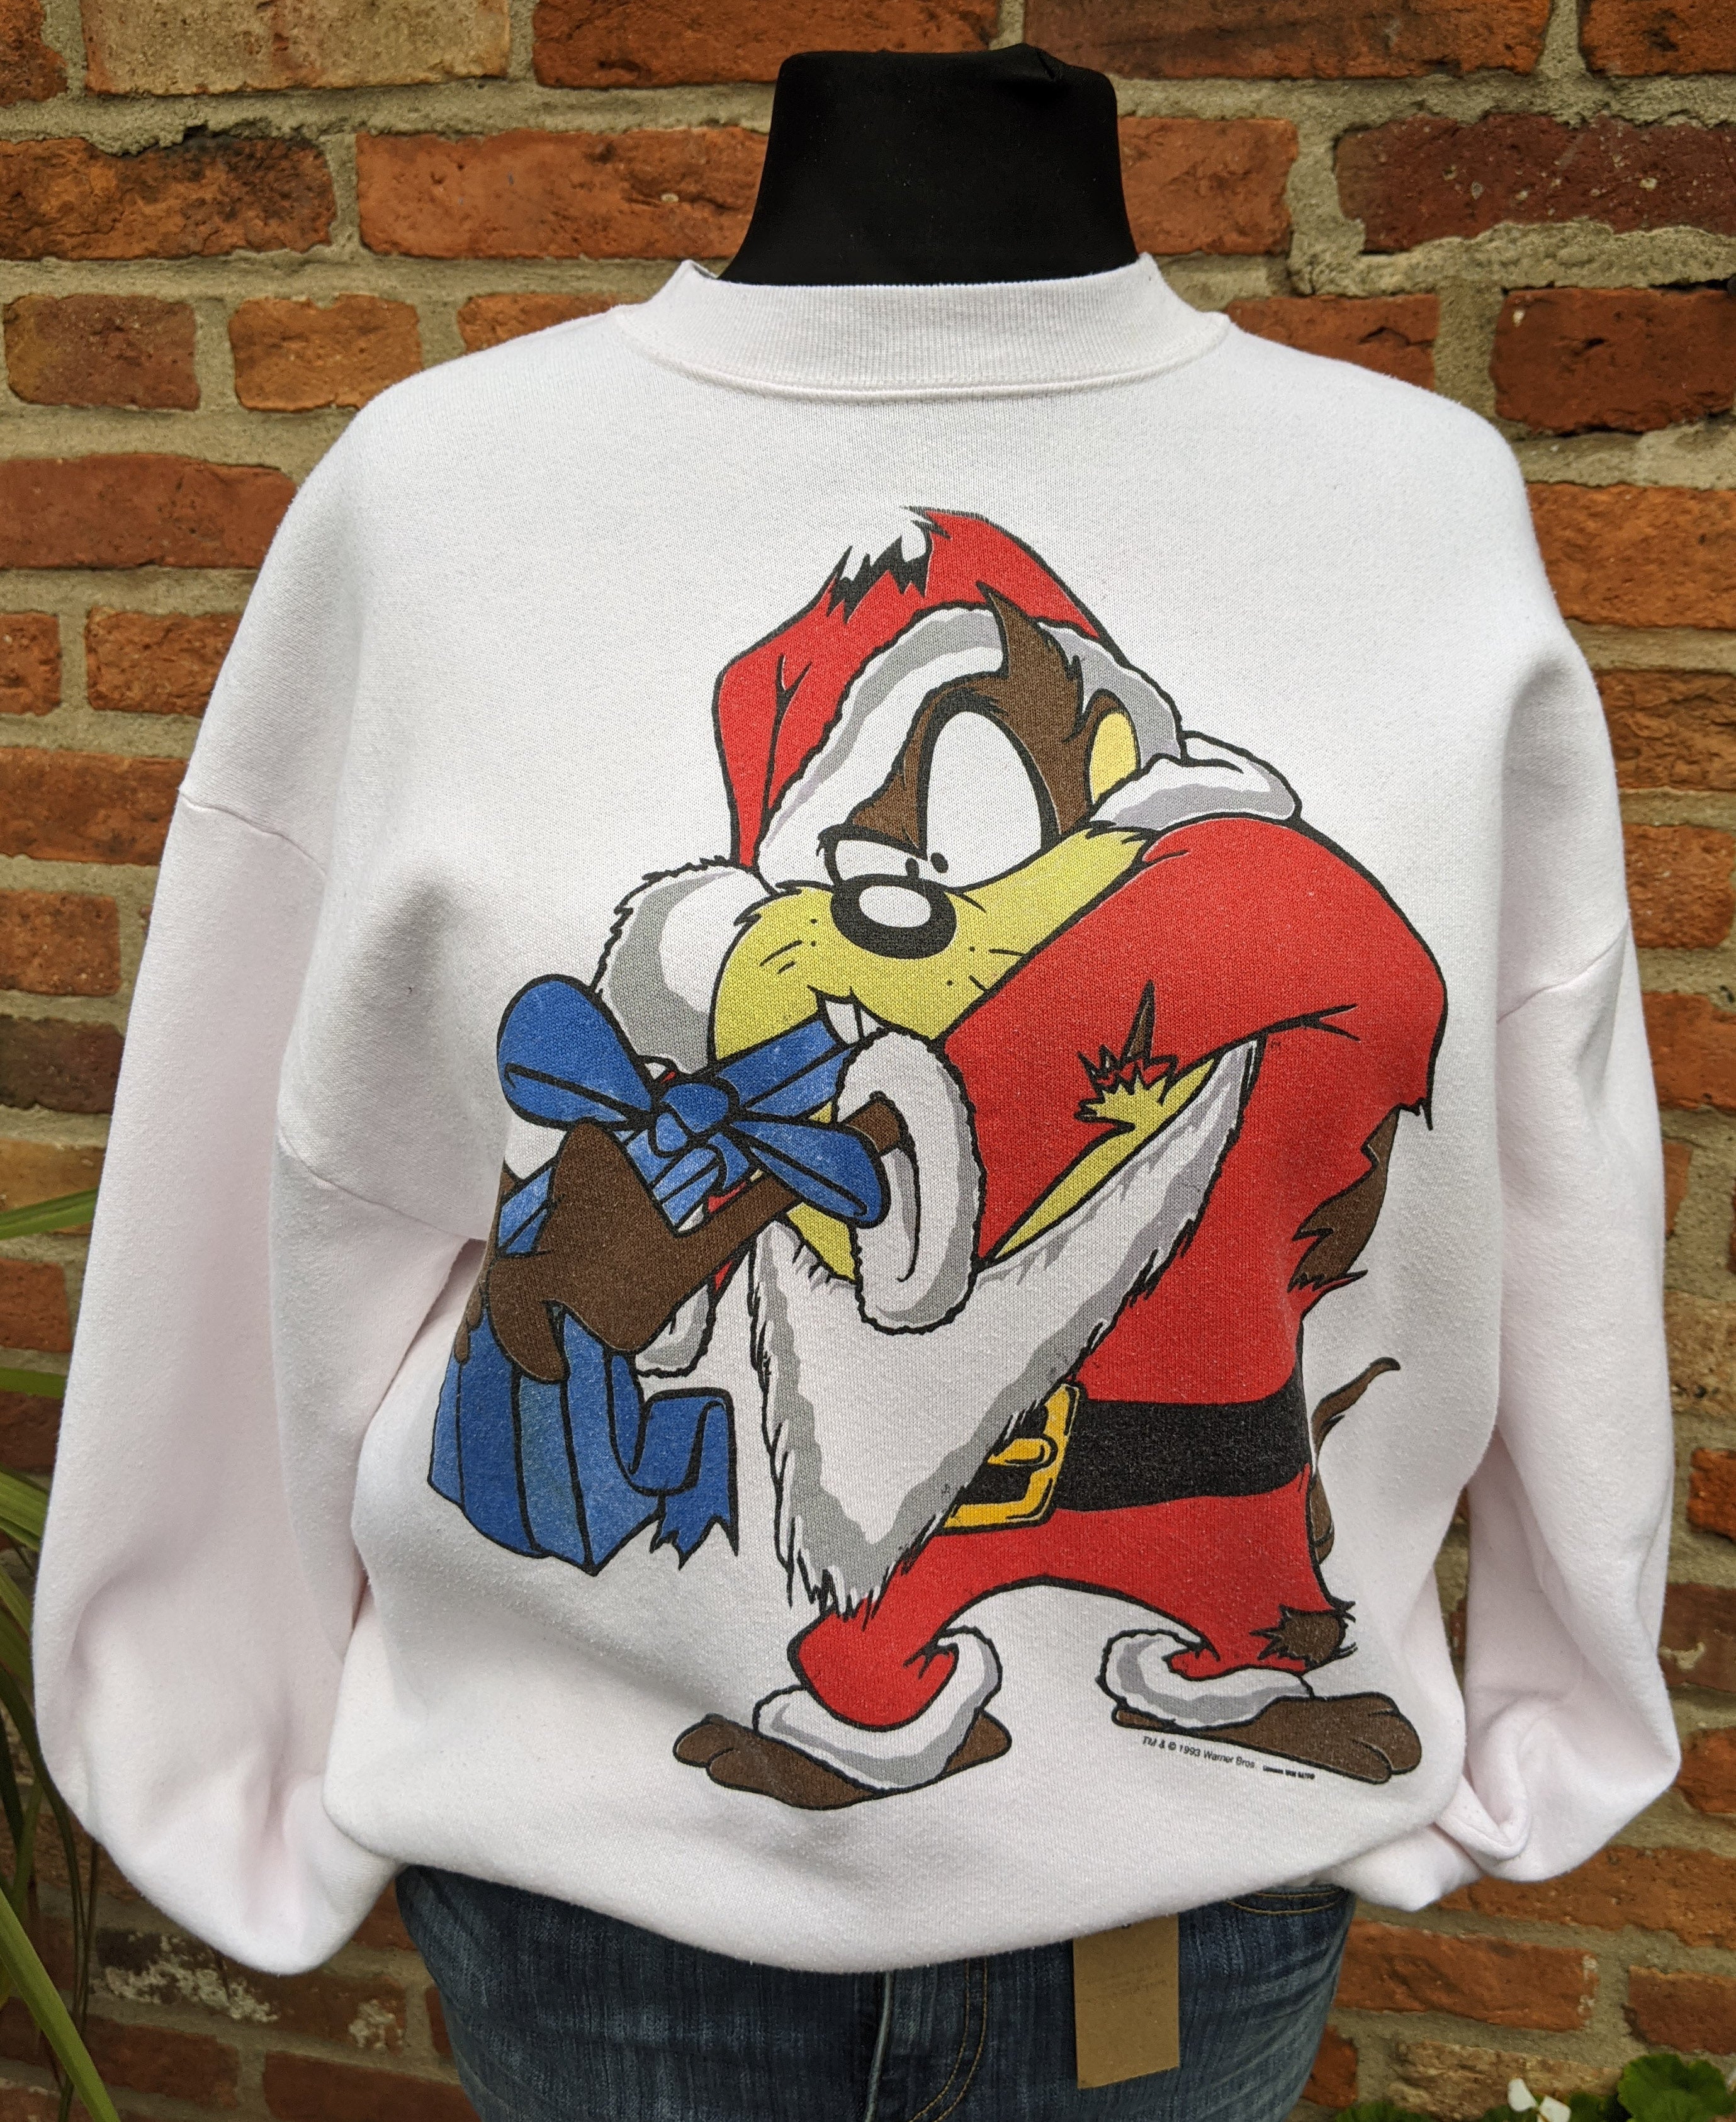 Taz Christmas sweatshirt size L item 885